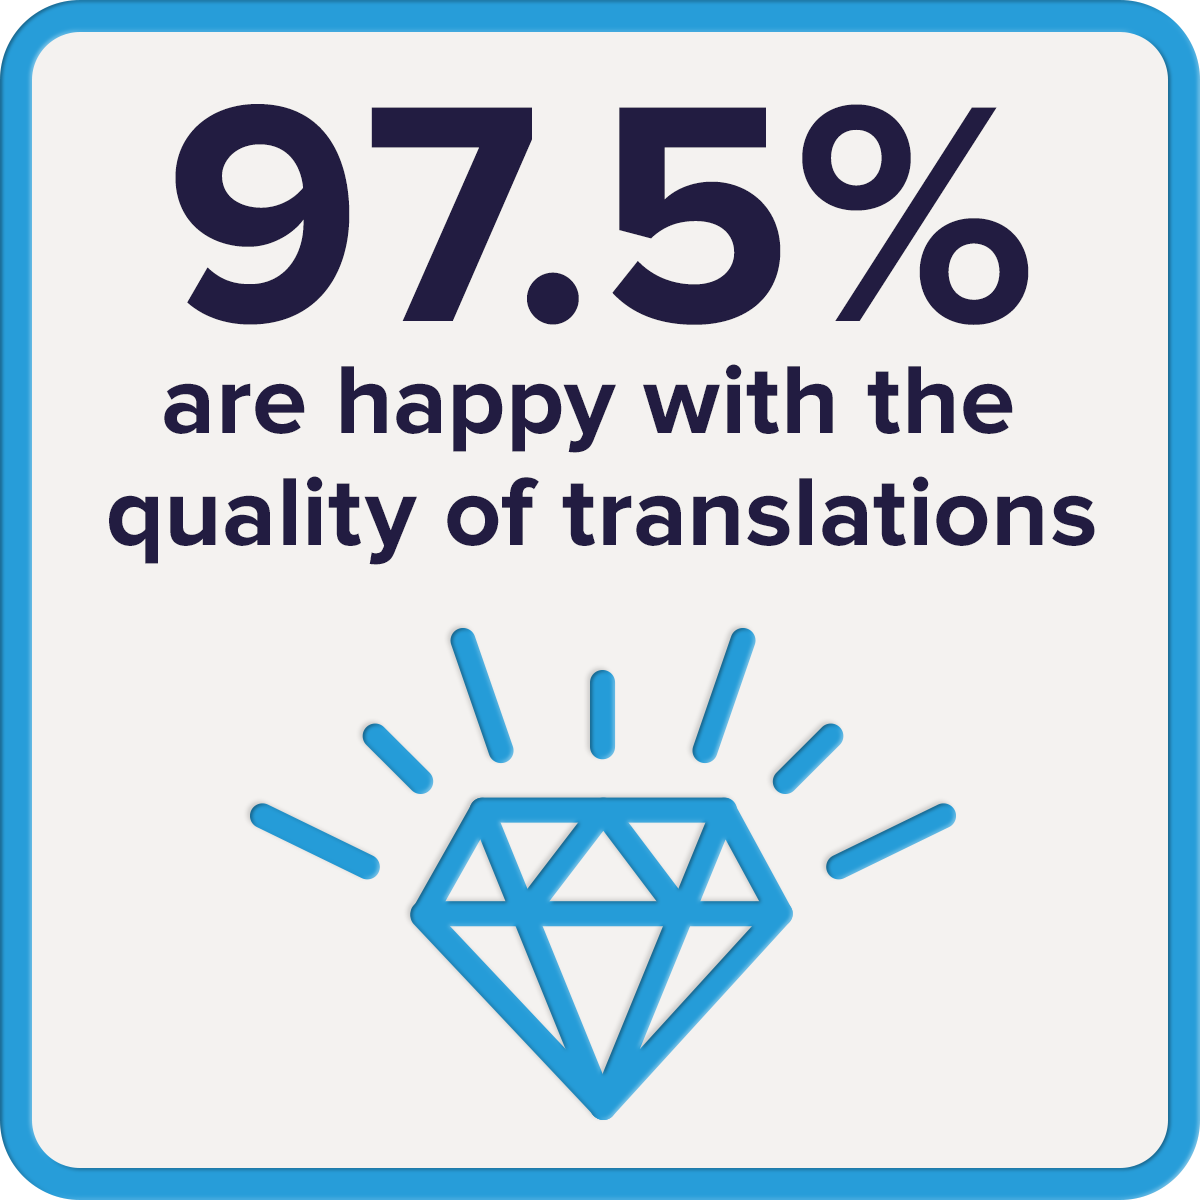 97.5% happy with translation quality